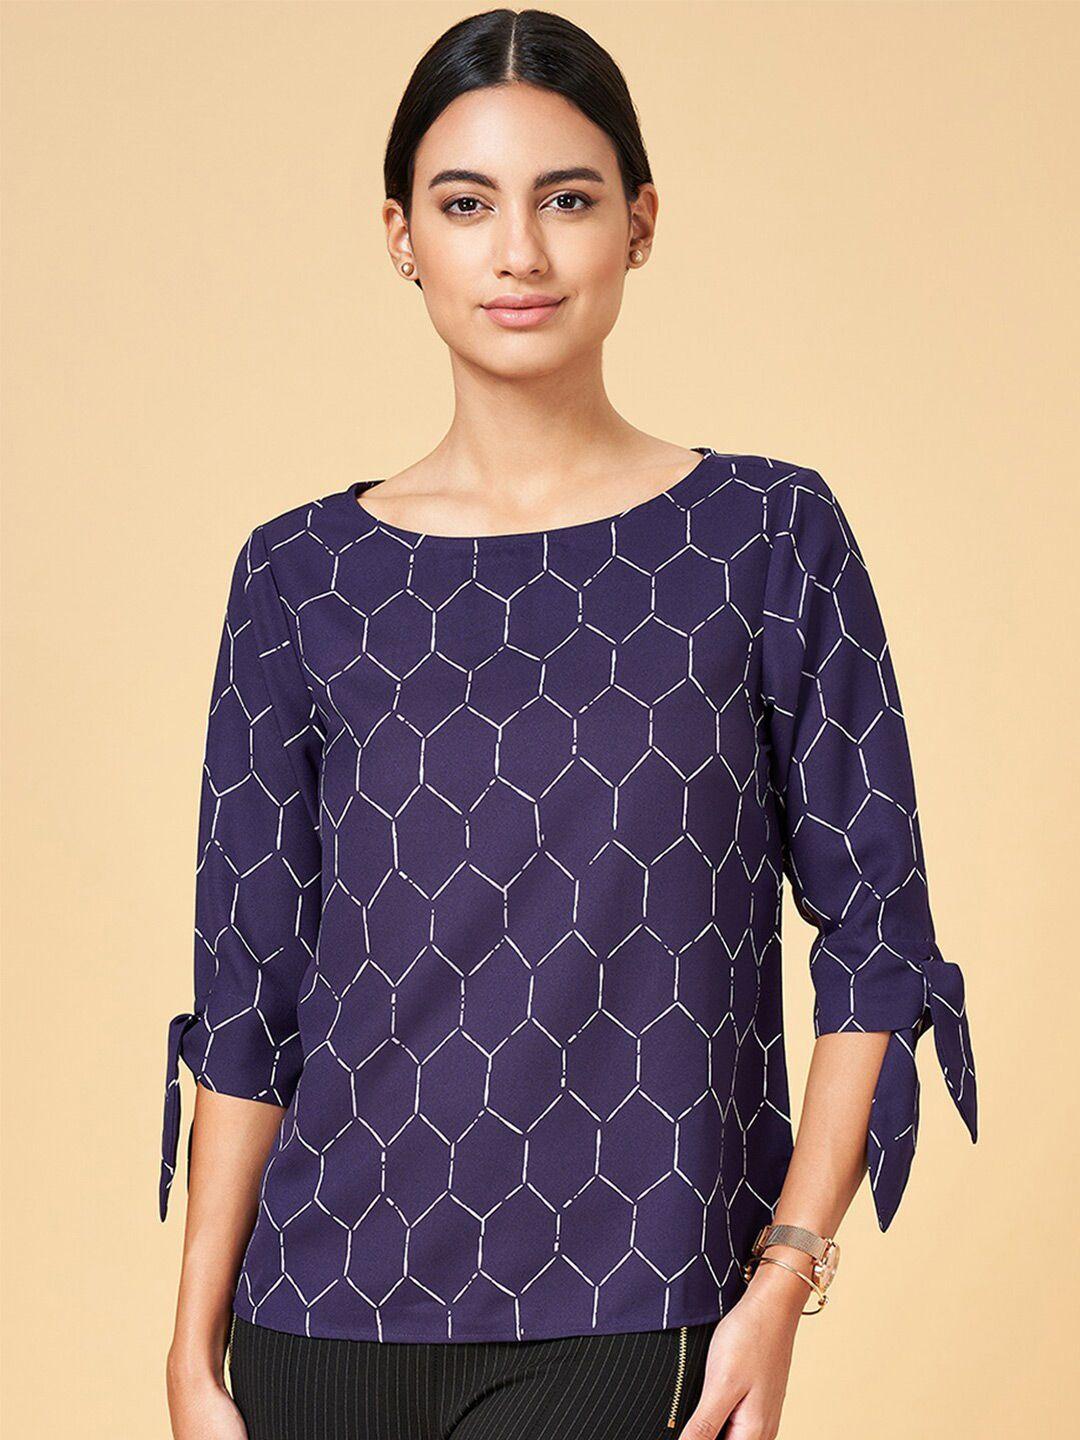 annabelle by pantaloons purple geometric print slit sleeve top